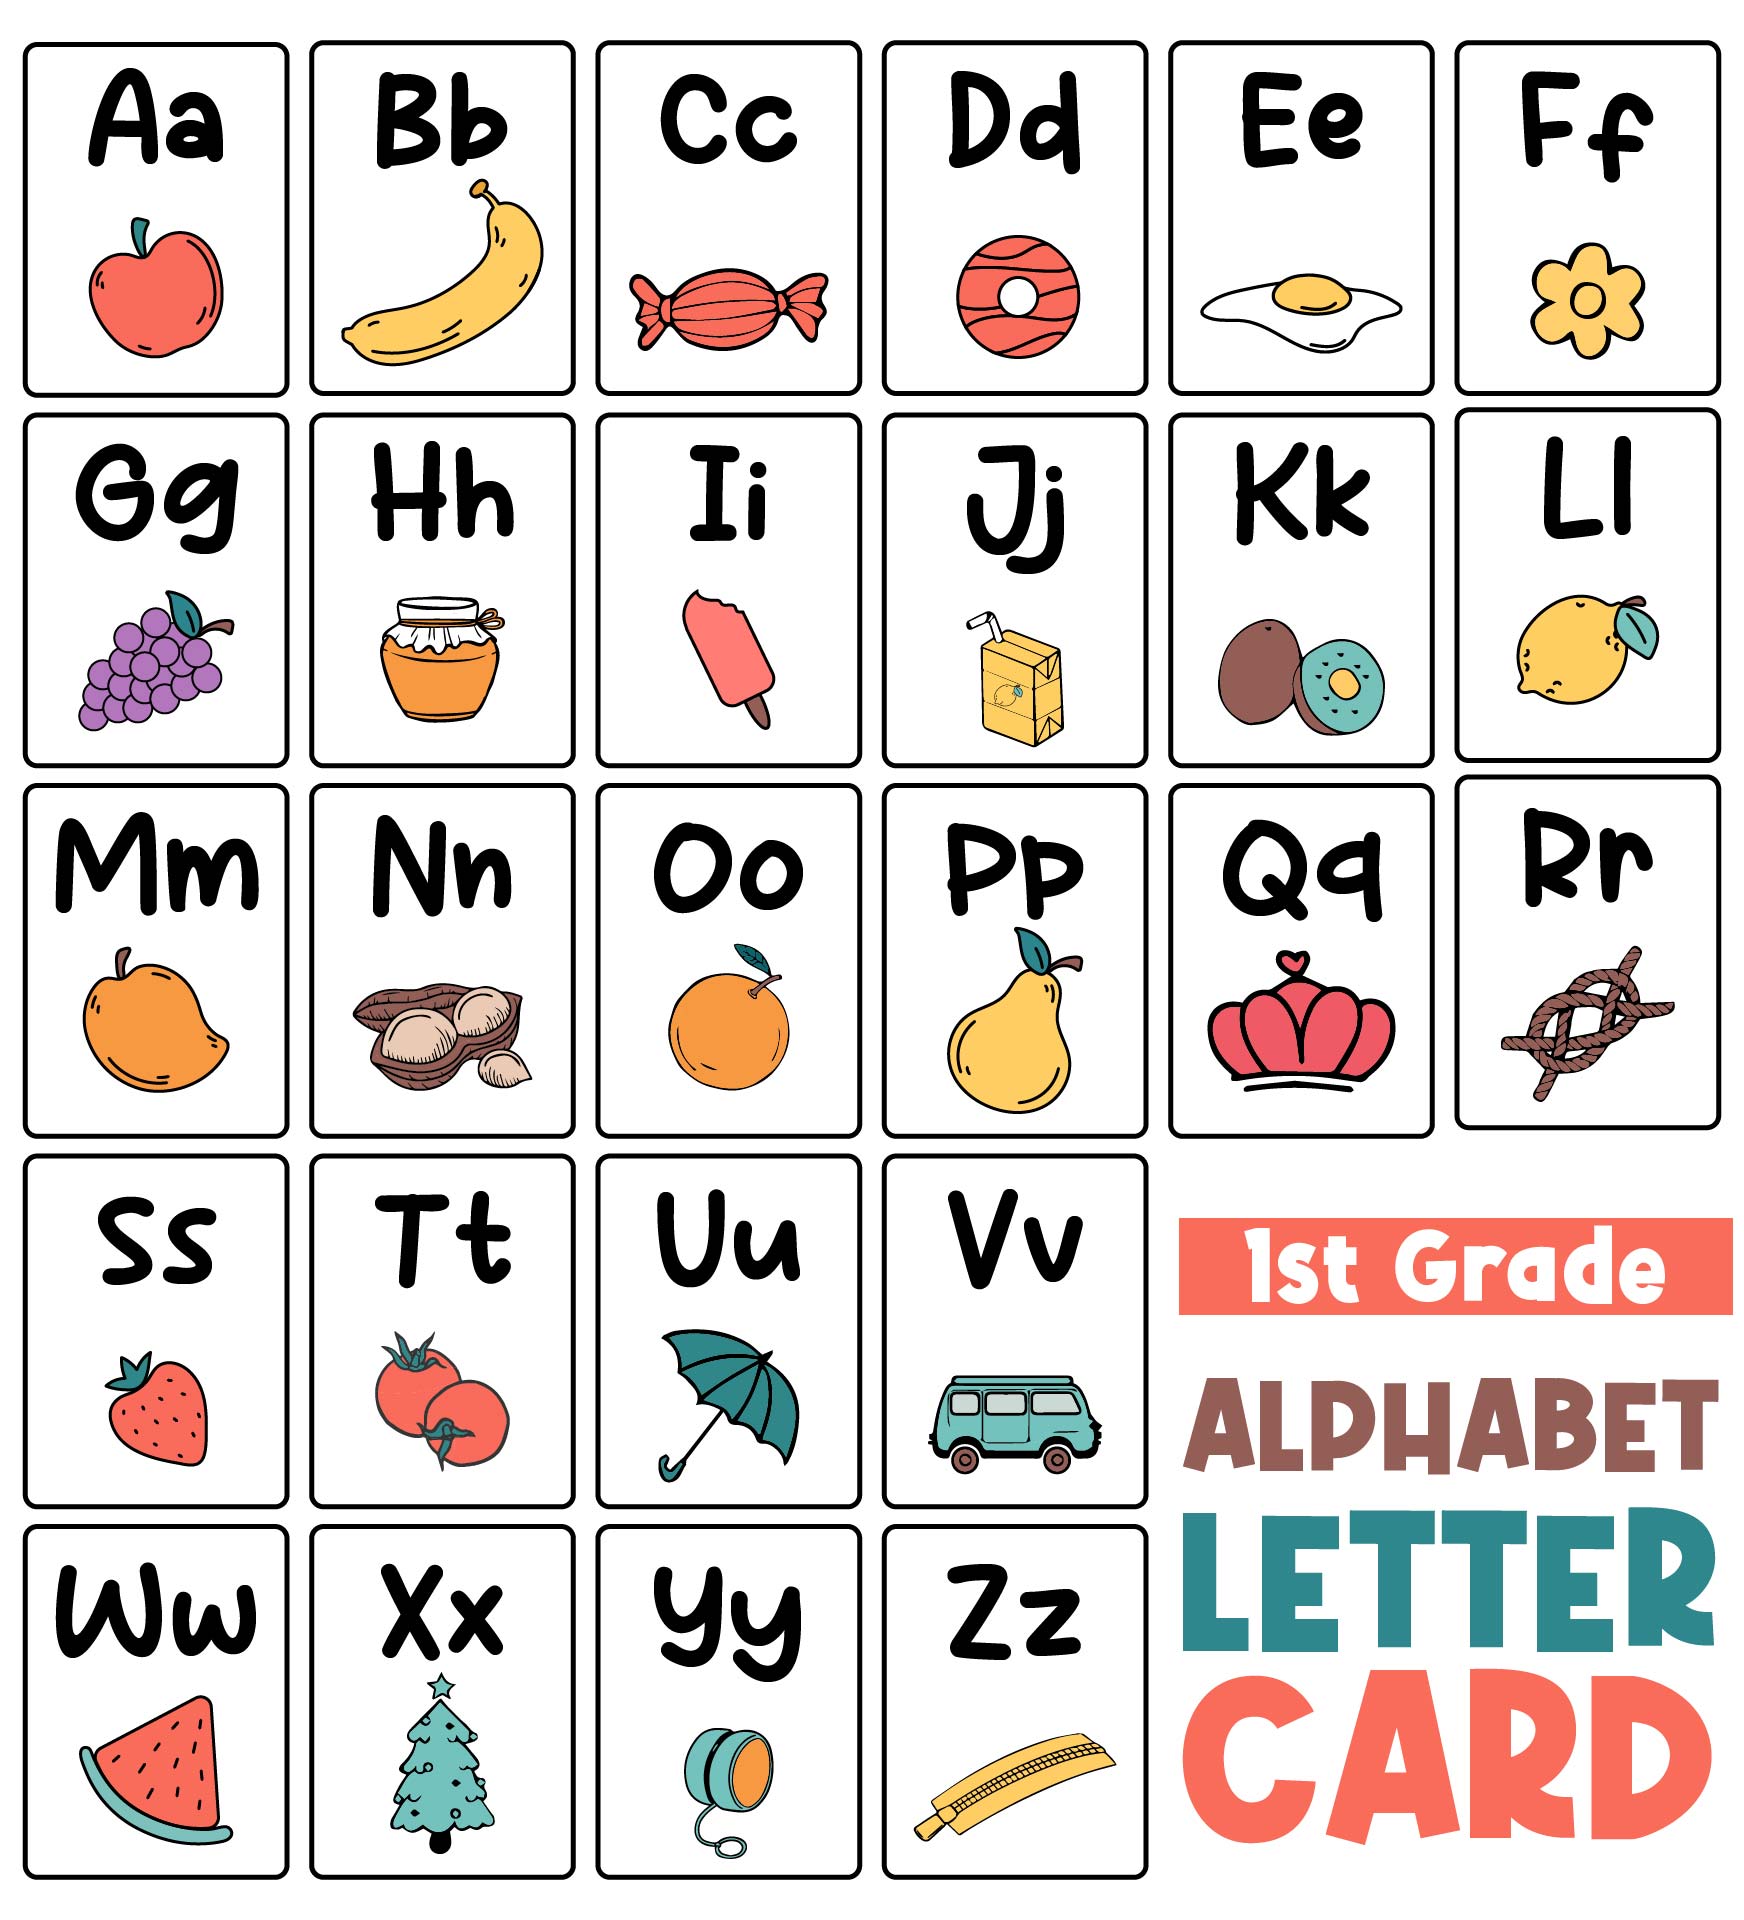 Alphabet Bubble Letter Cards Worksheet For Kindergarten - 1st Grade